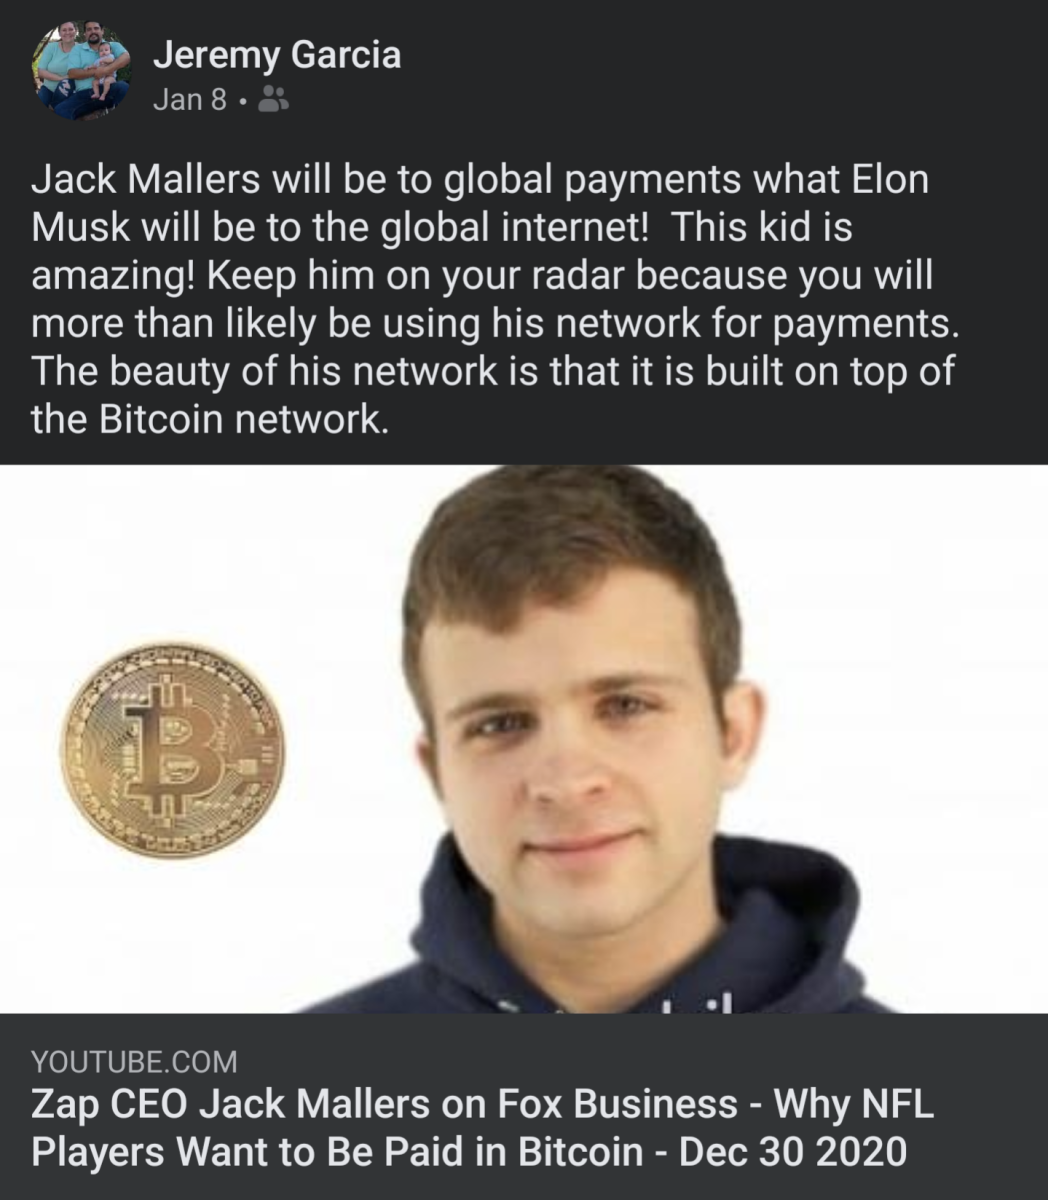 Jack Mallers strike post on Facebook